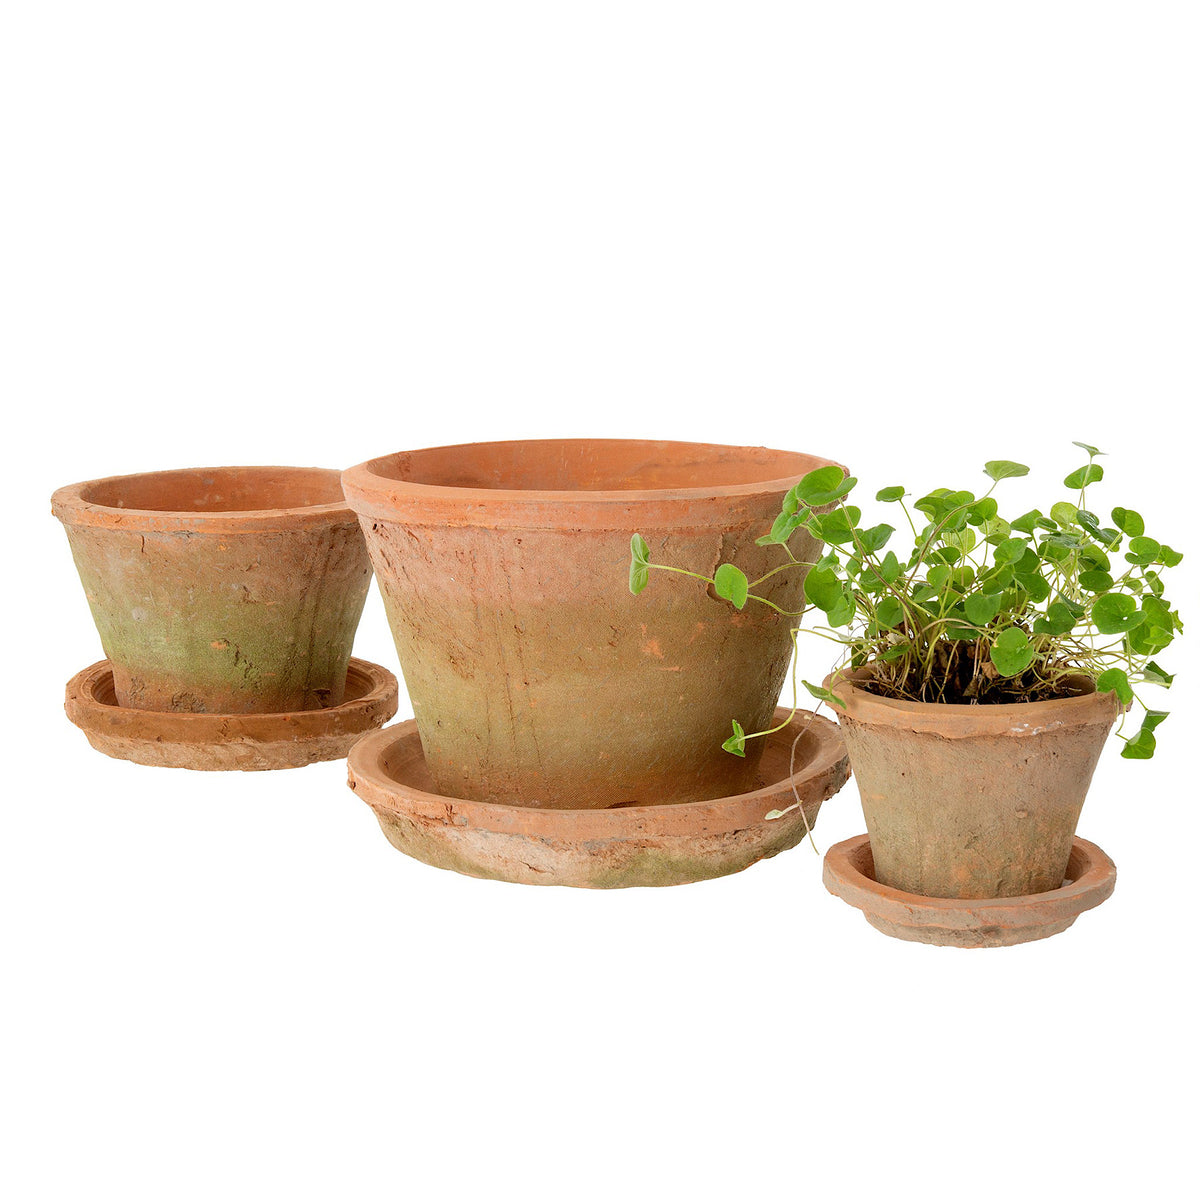 Aged Clay Cactus Pots, Antique Redstone, Three Sizes